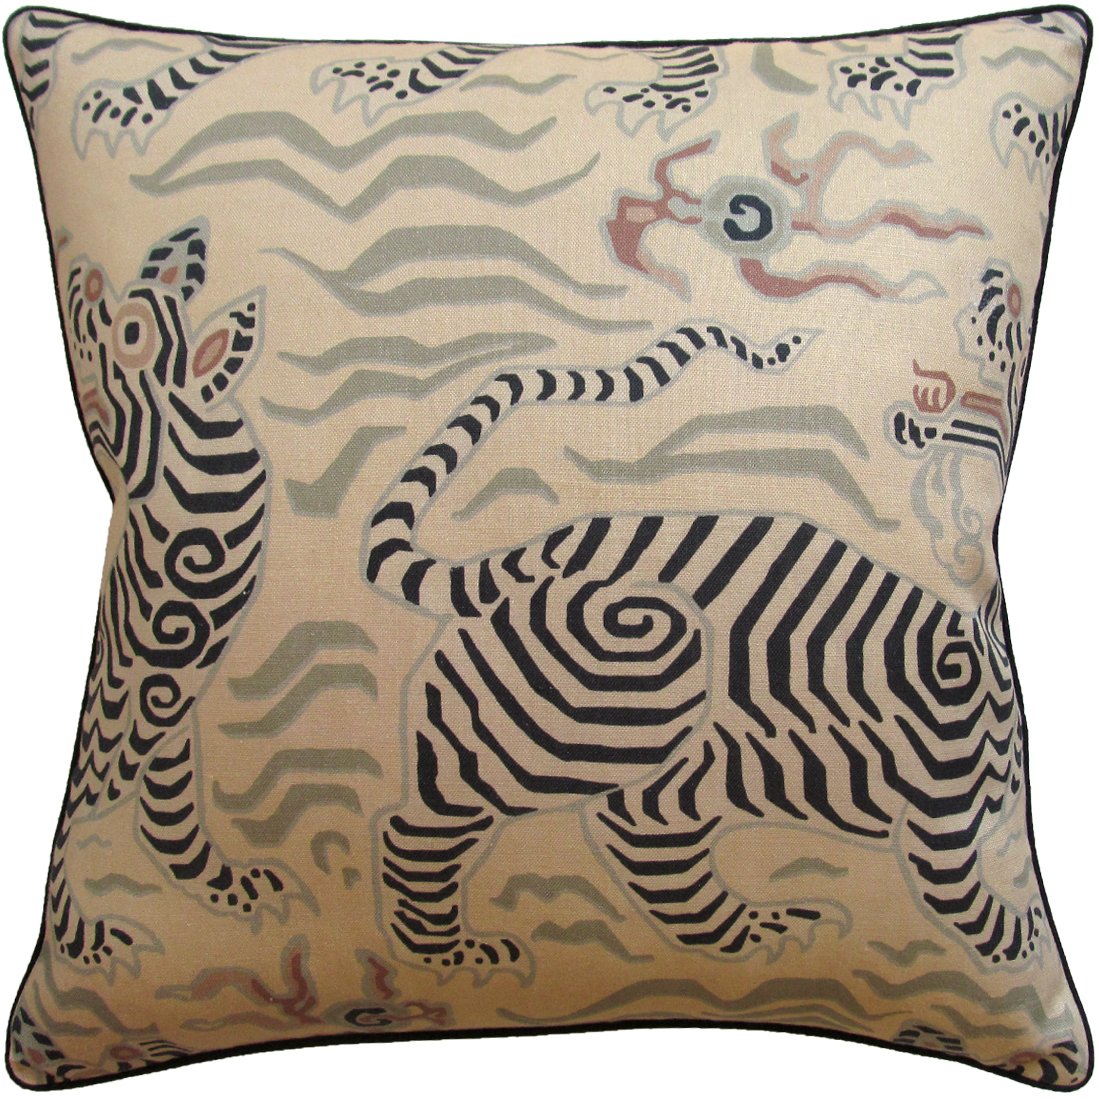 Fig Linens - Tibet Antique Decorative Pillow - Shop Ryan Studio Pillows